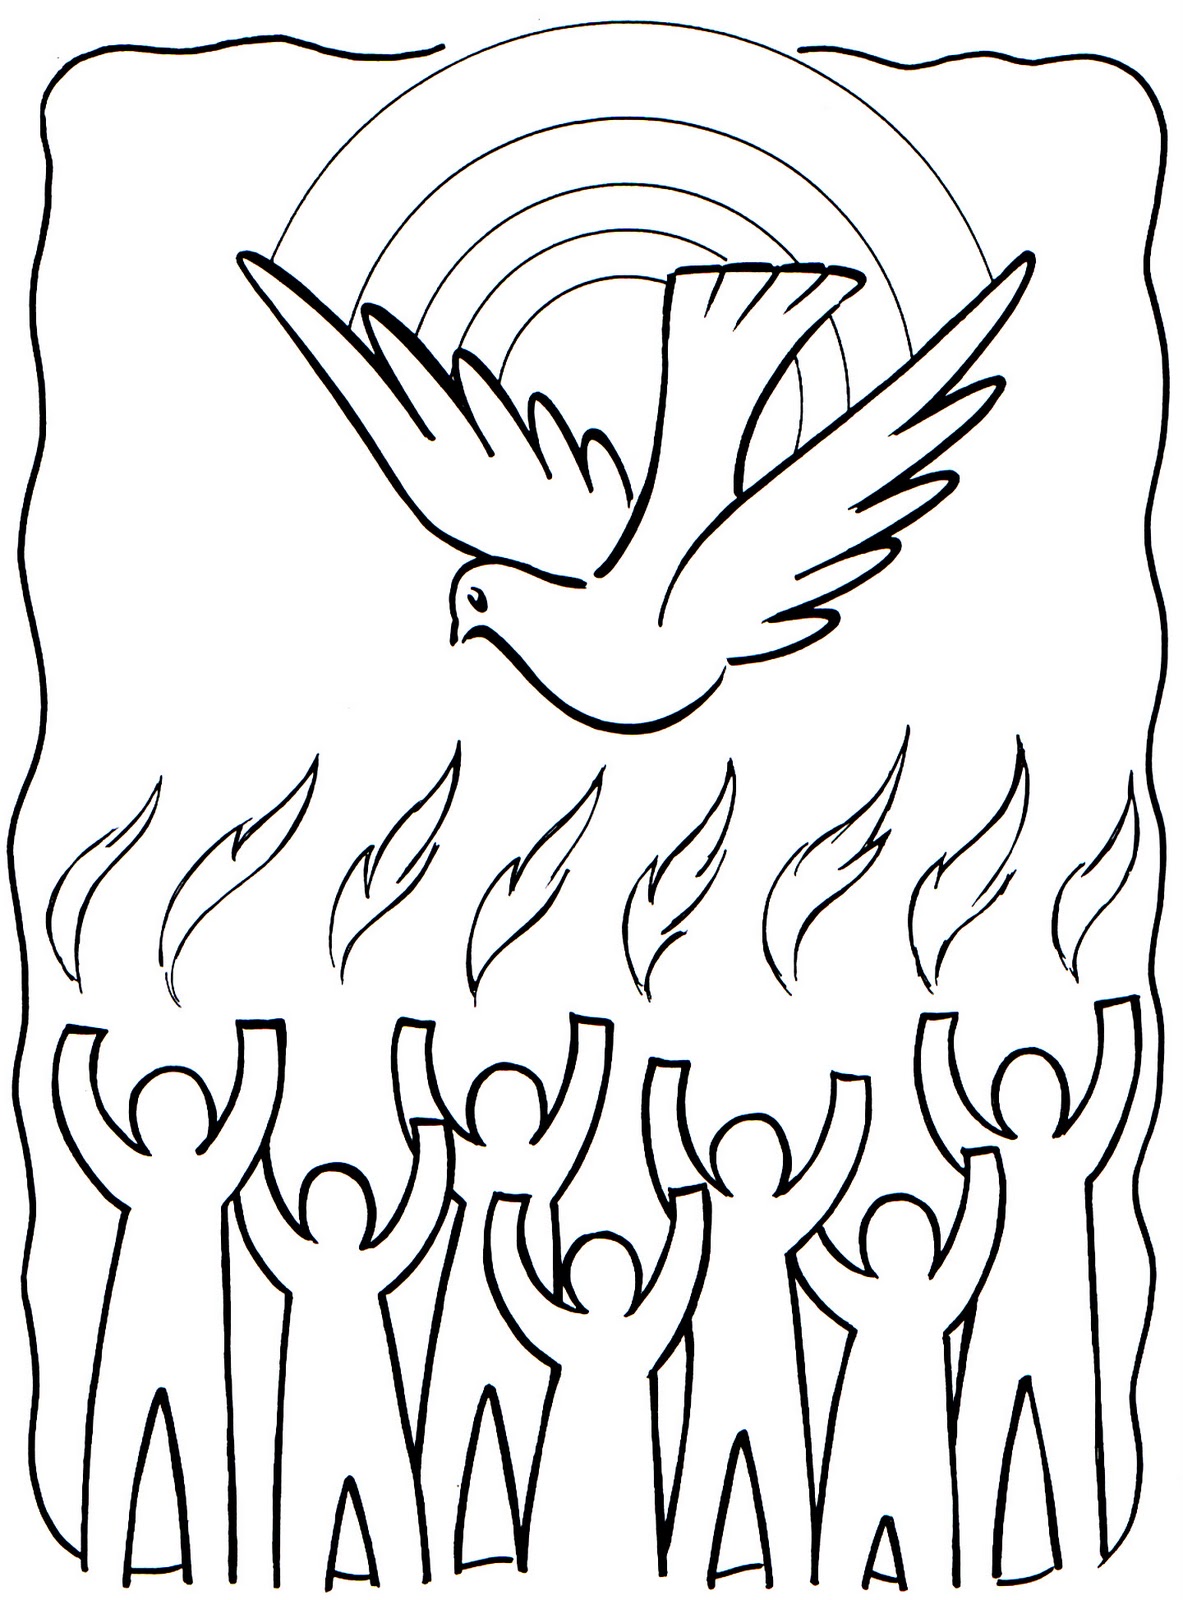 Dibujos de lenguas fuego espiritu santo para colorear